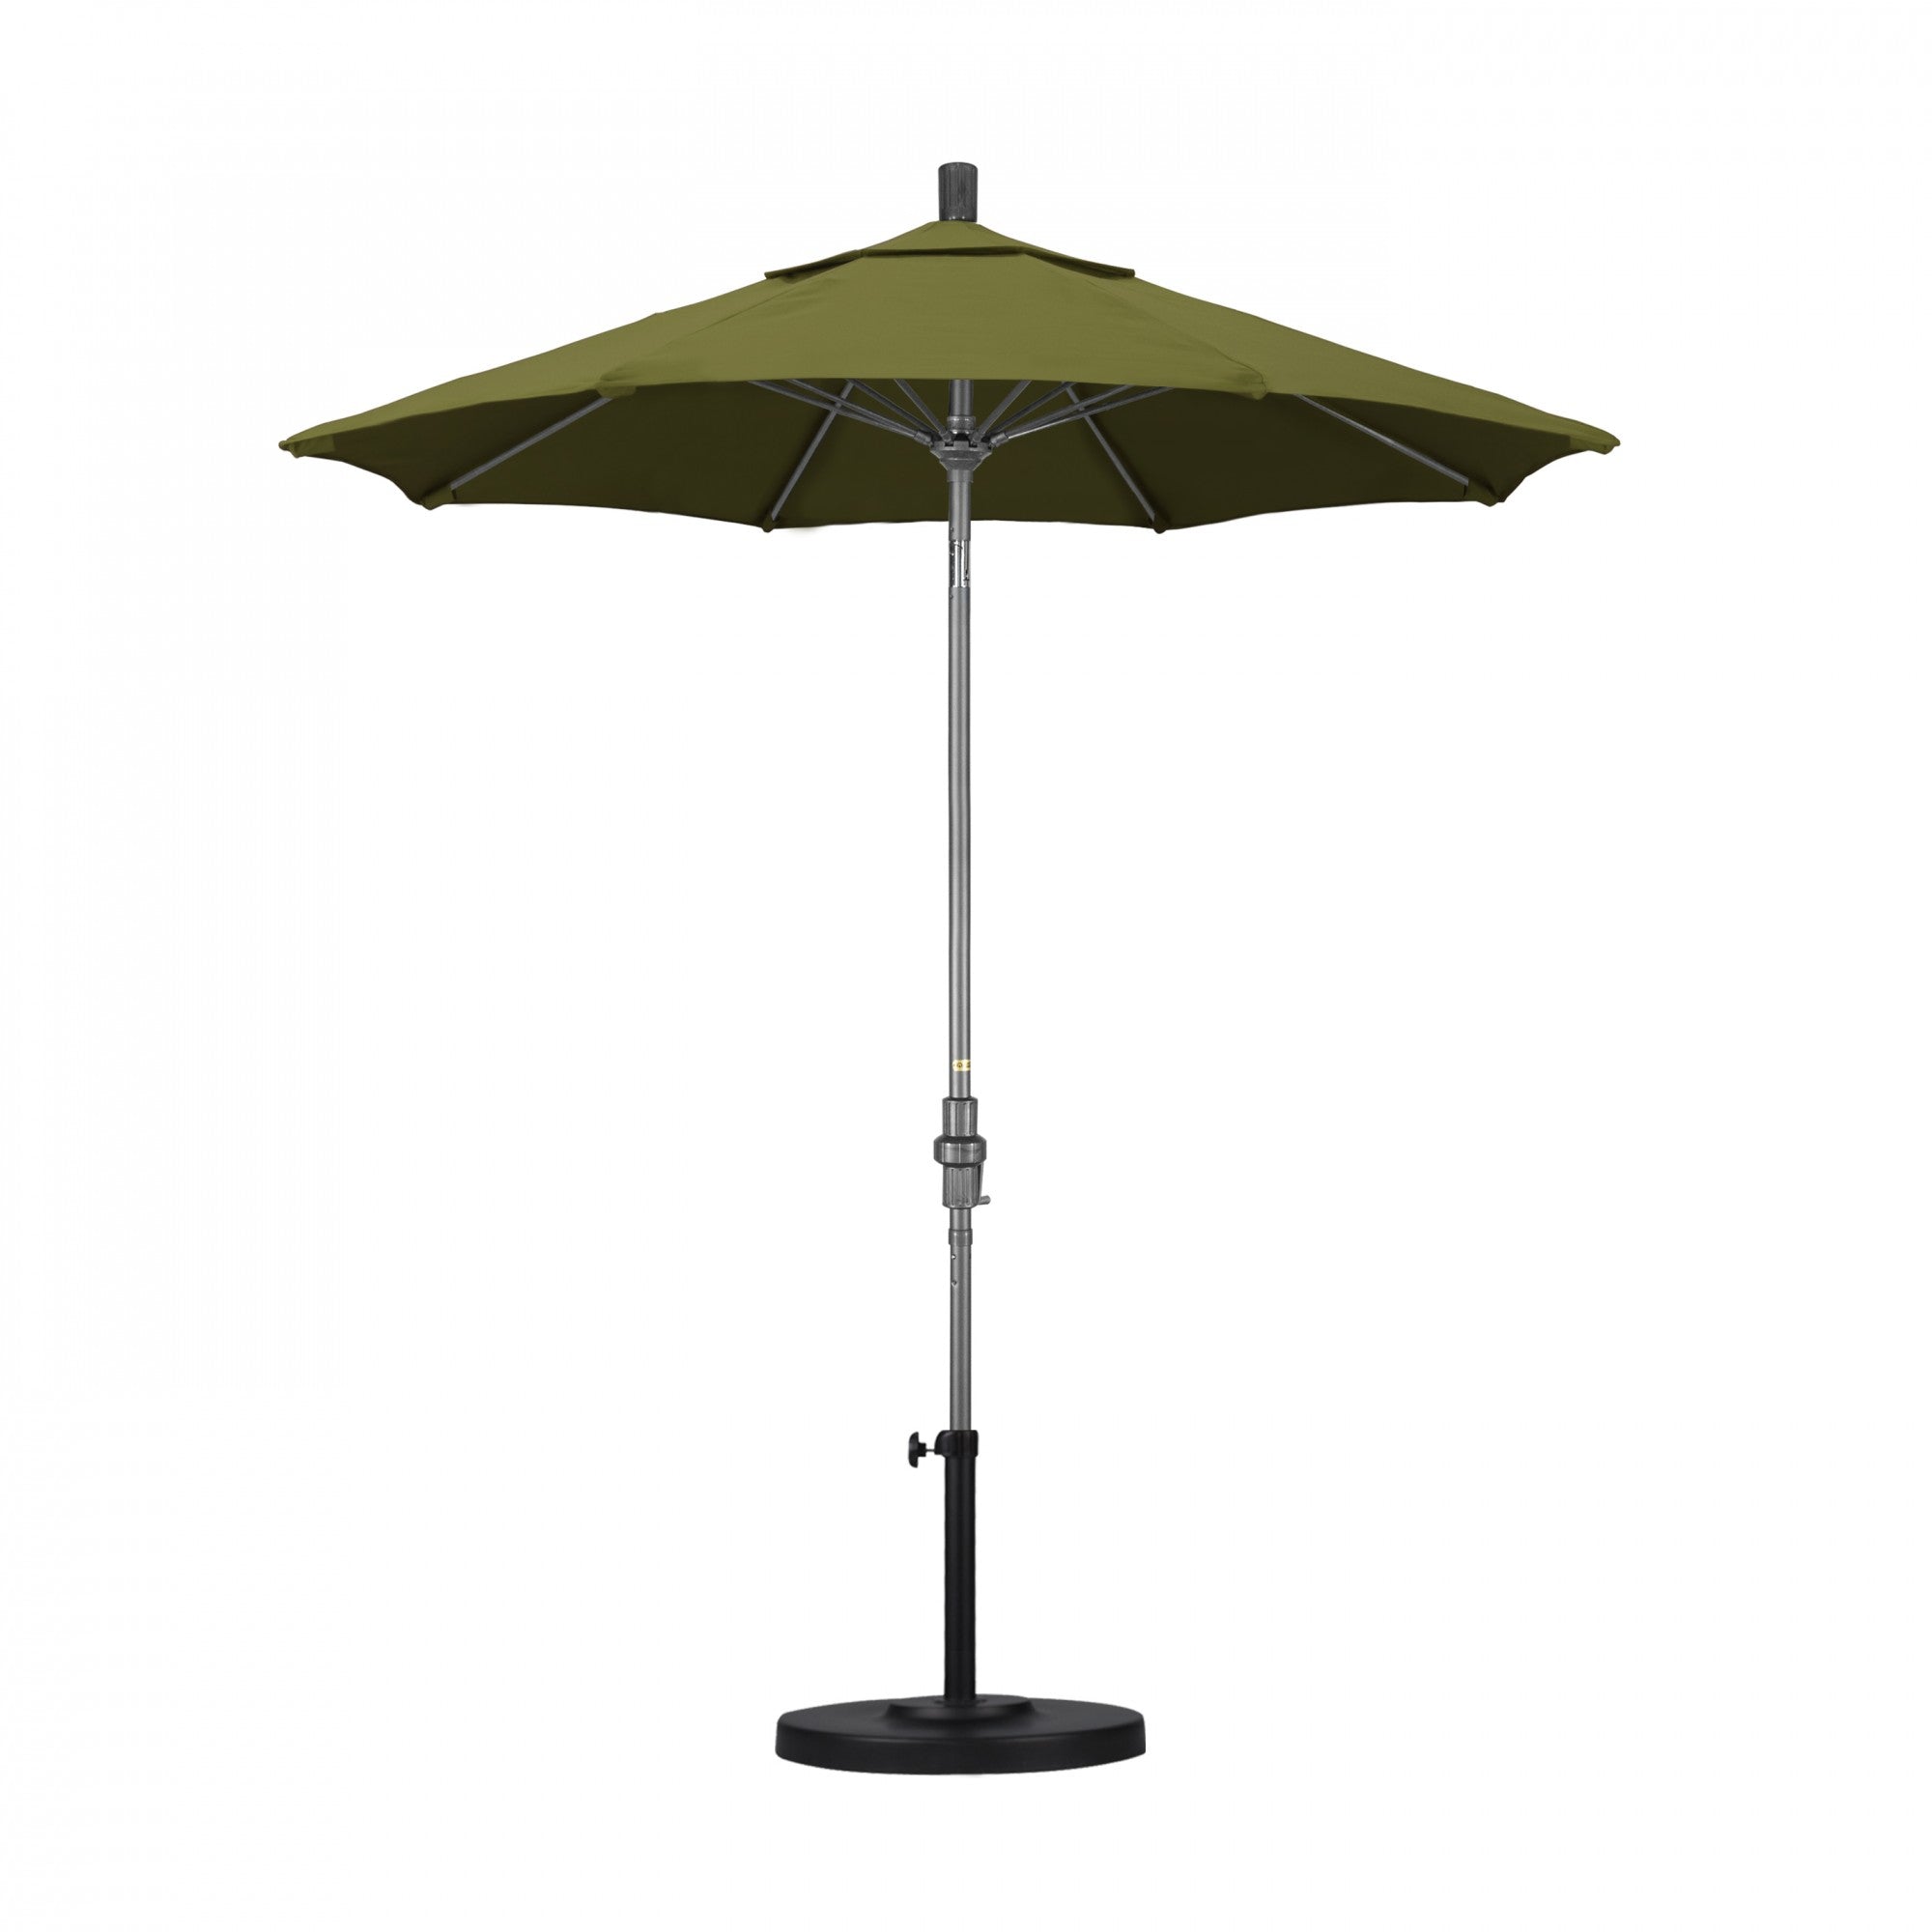 California Umbrella - 7.5' - Patio Umbrella Umbrella - Aluminum Pole - Palm - Pacifica - GSCUF758010-SA21